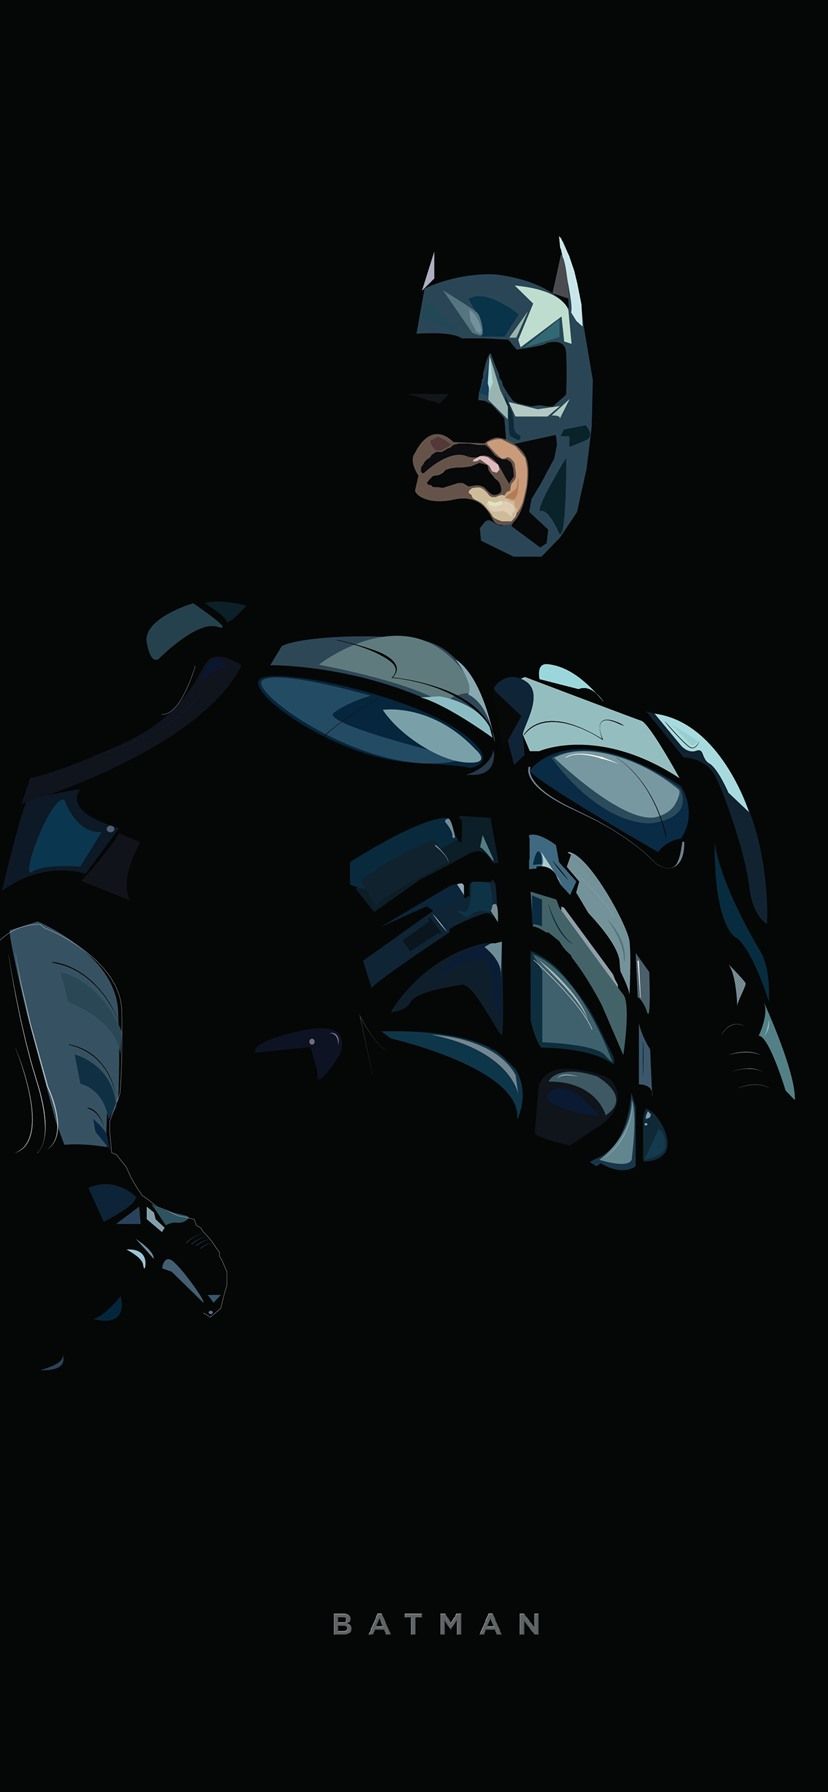 Wallpaper Batman, superhero, art picture, black background 7680x4320 UHD 8K Picture, Image